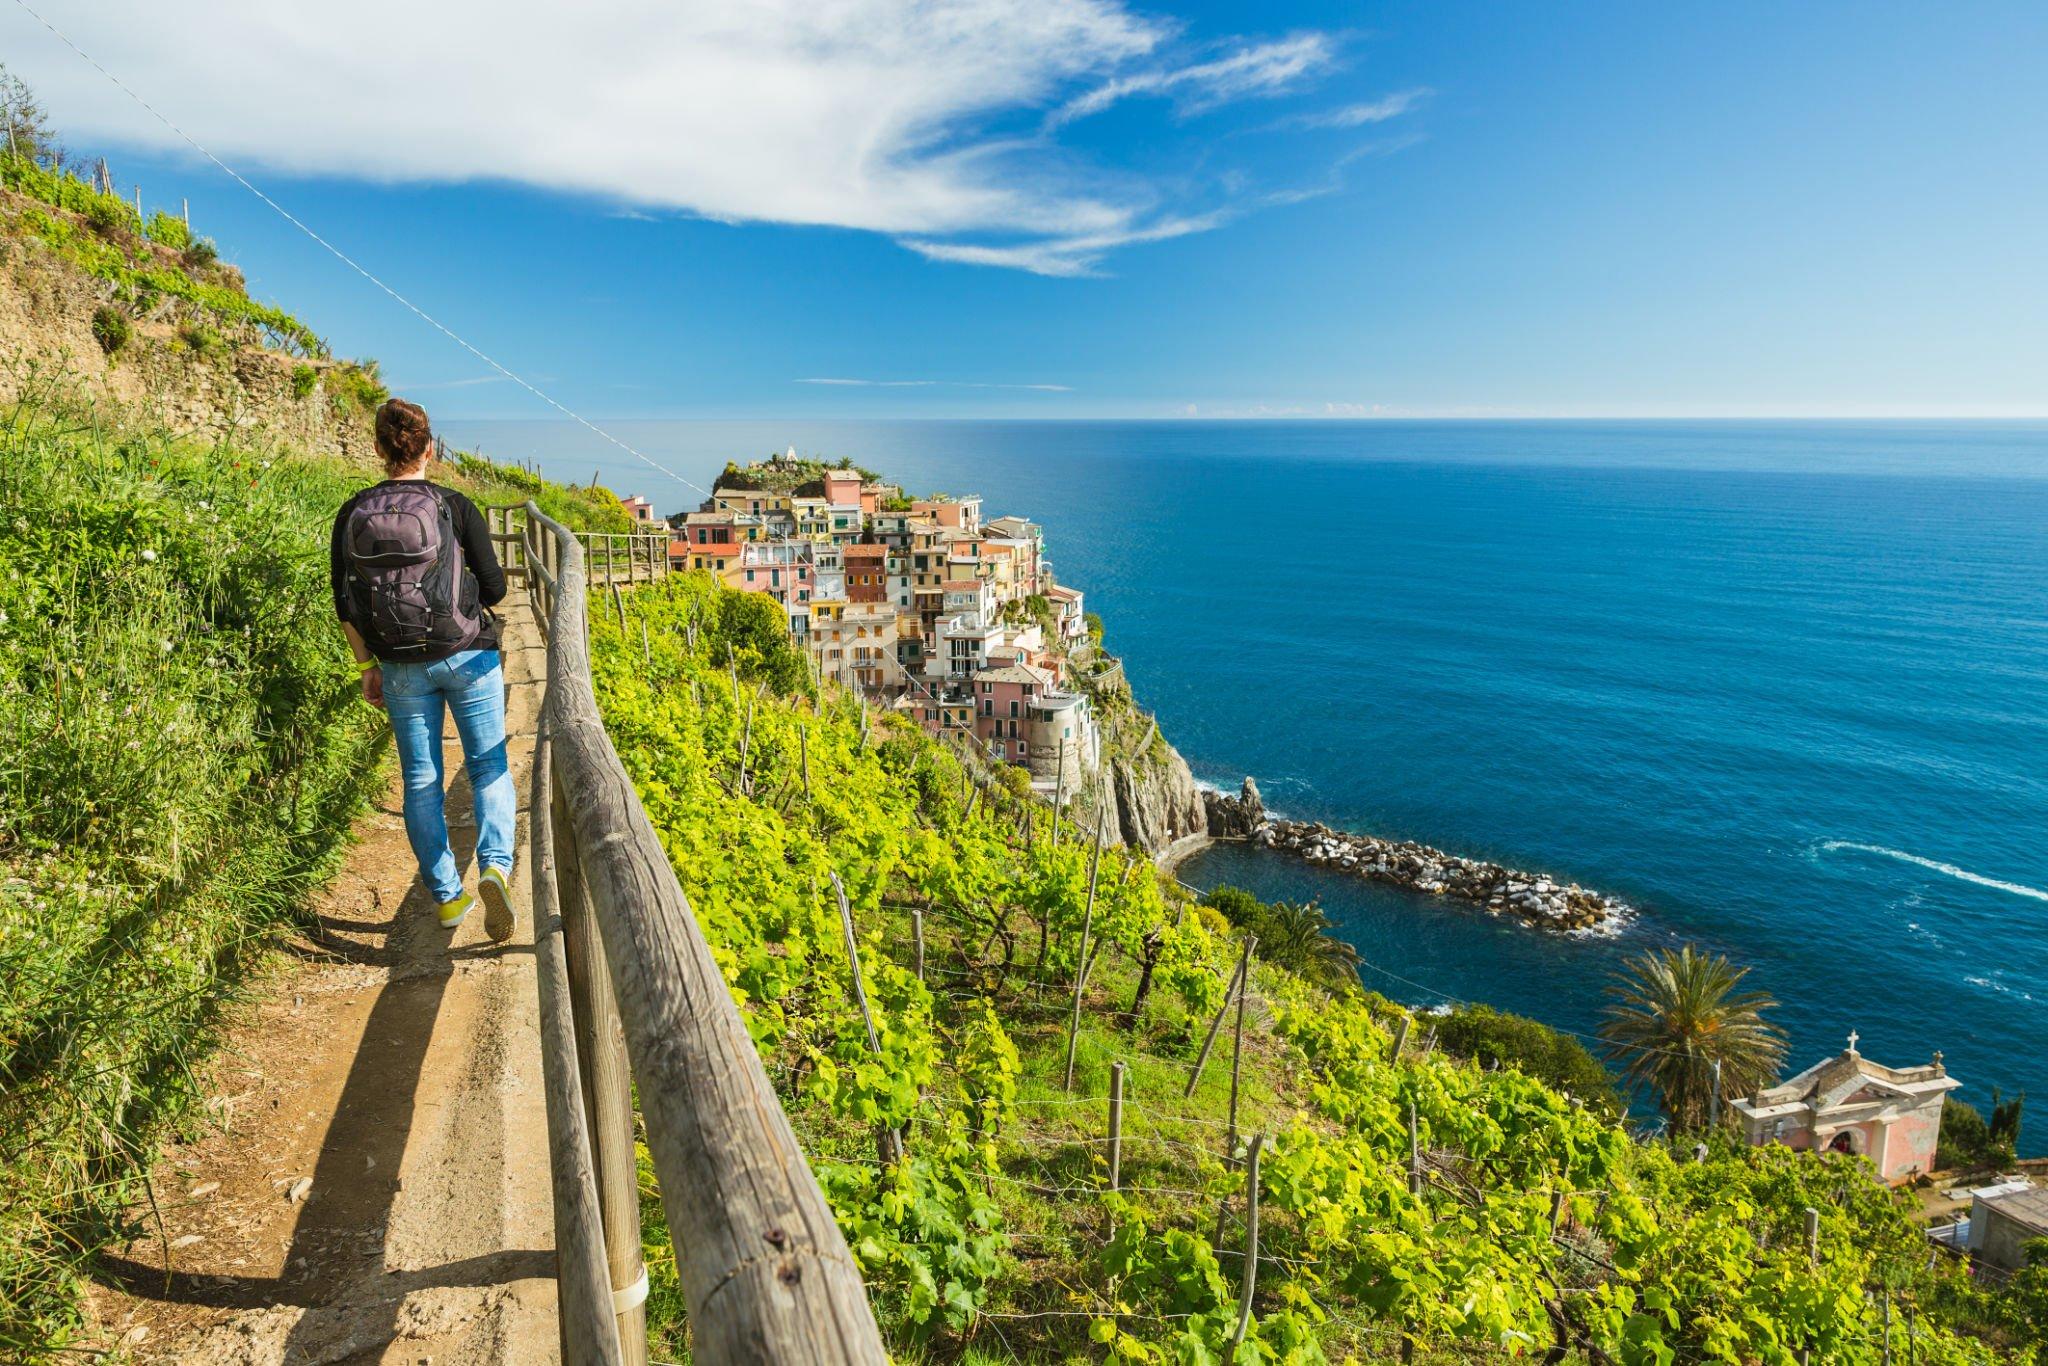 Do You Want to Explore Cinque Terre National Park